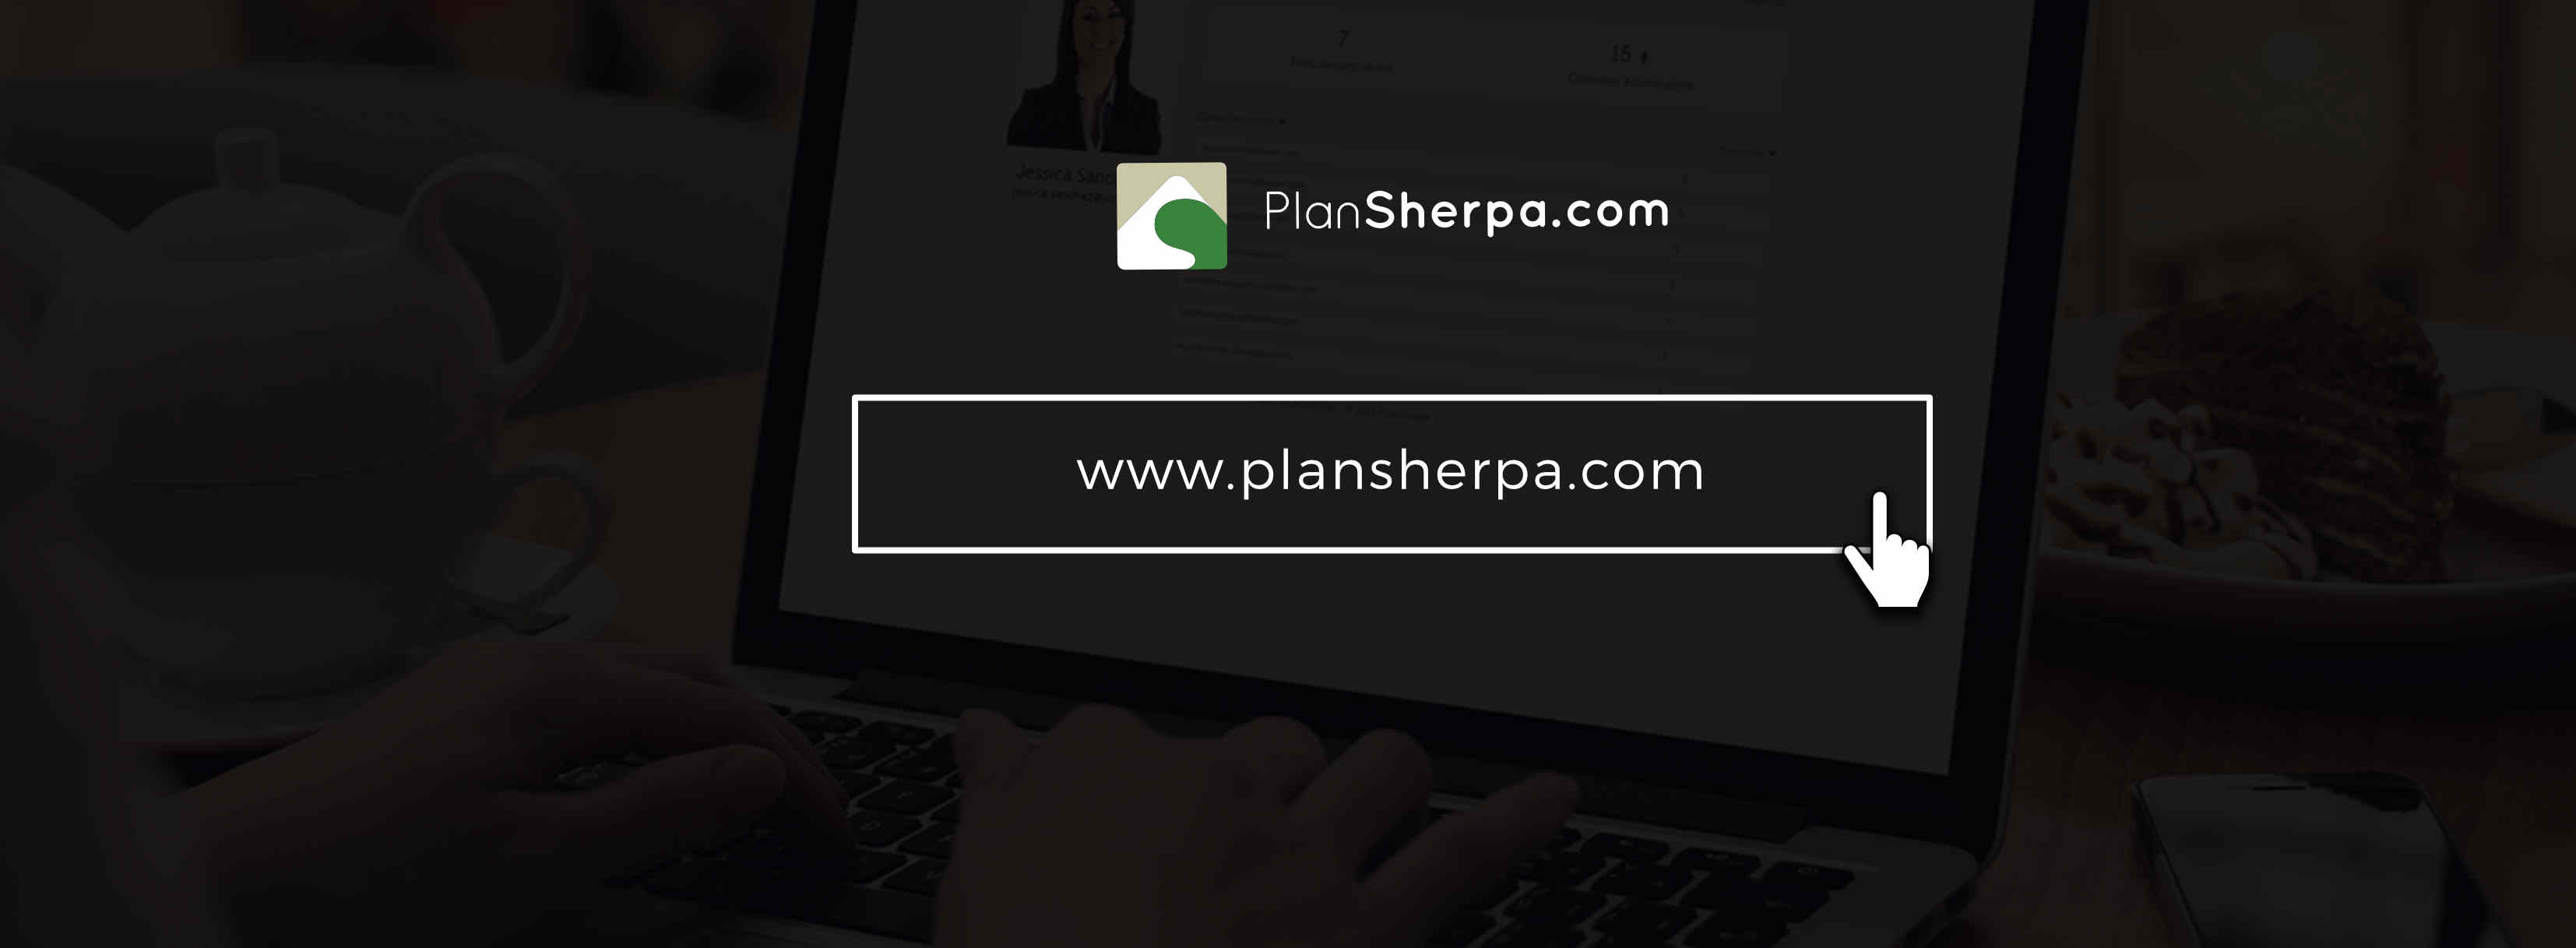 www.plansherpa.com